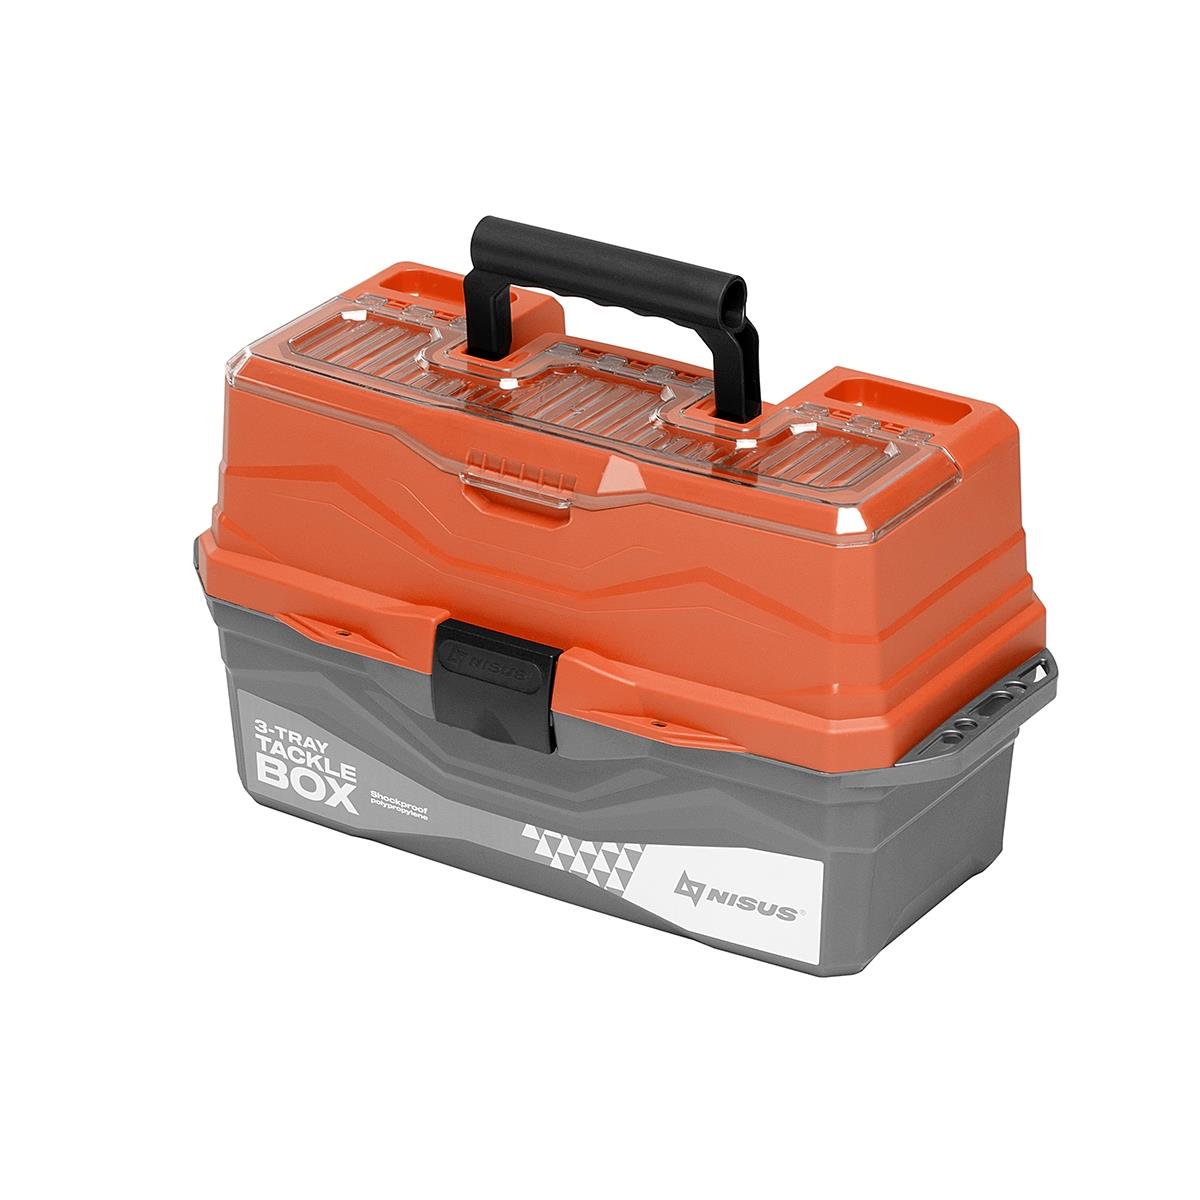 Ящик для снастей Tackle Box трехполочный оранжевый (N-TB-3-O) NISUS ящик для снастей tackle box трехполочный зеленый n tb 3 g nisus